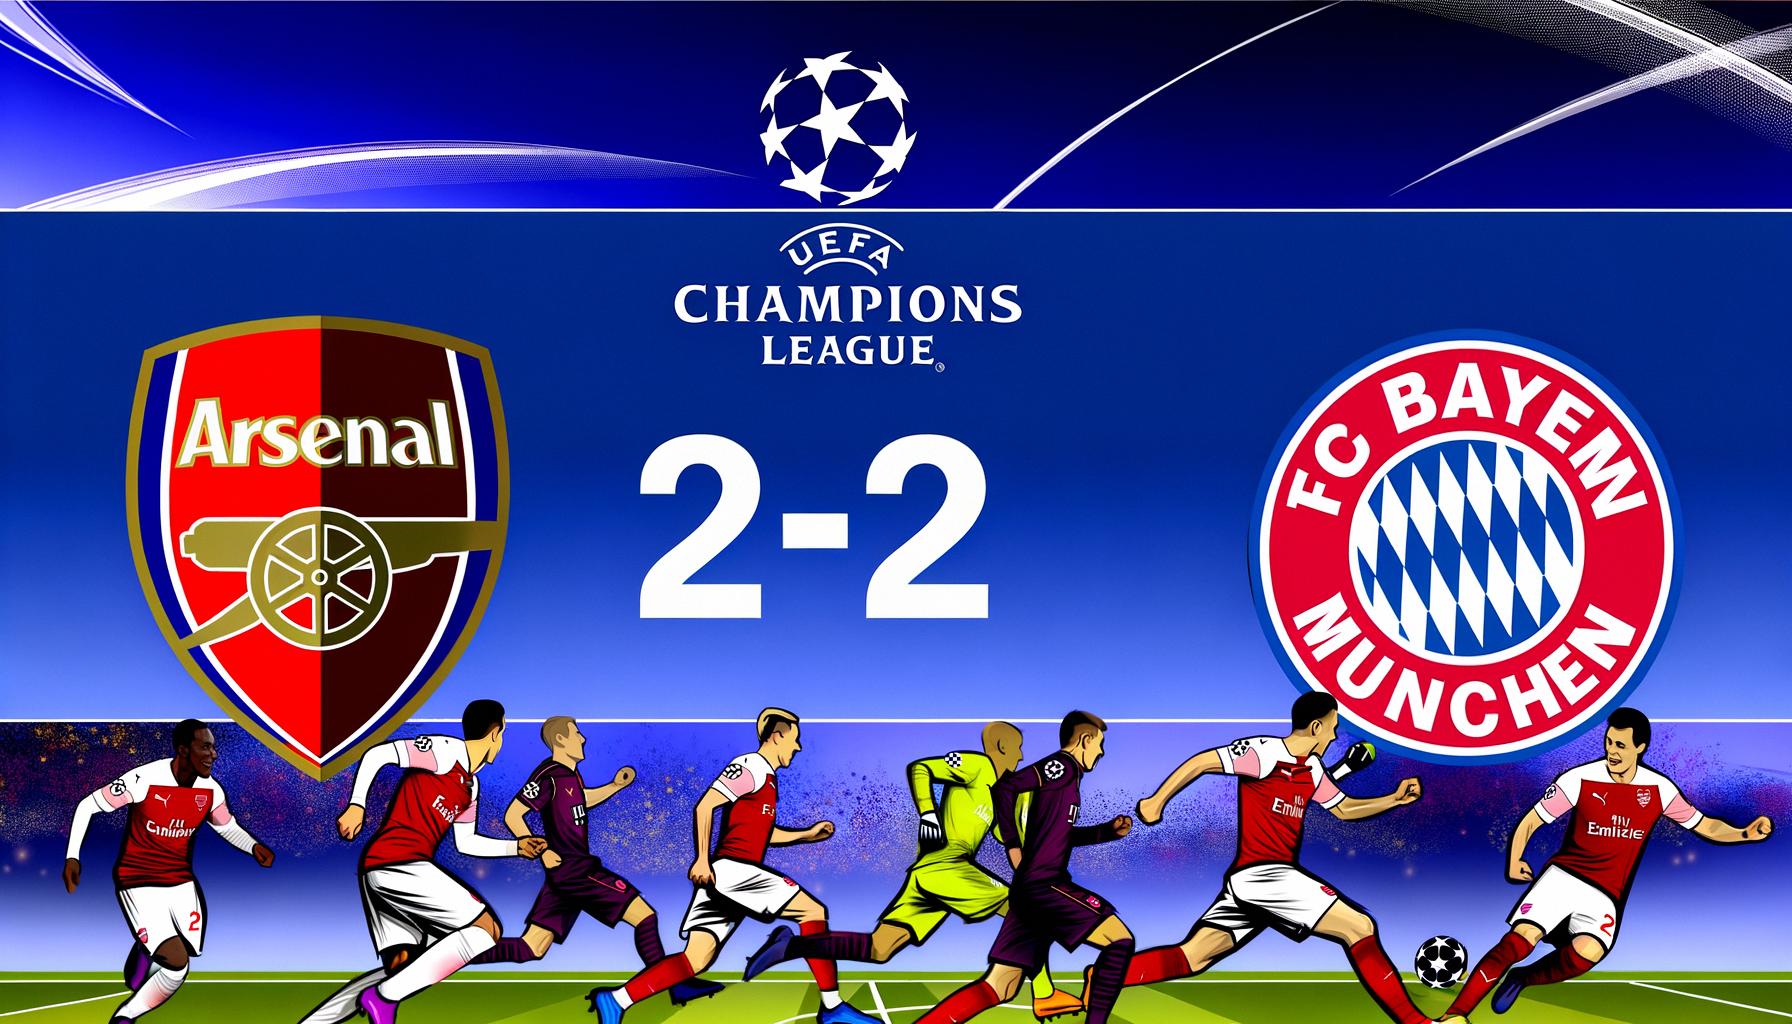 Arsenal and Bayern Munich drew 2-2 in Champions League